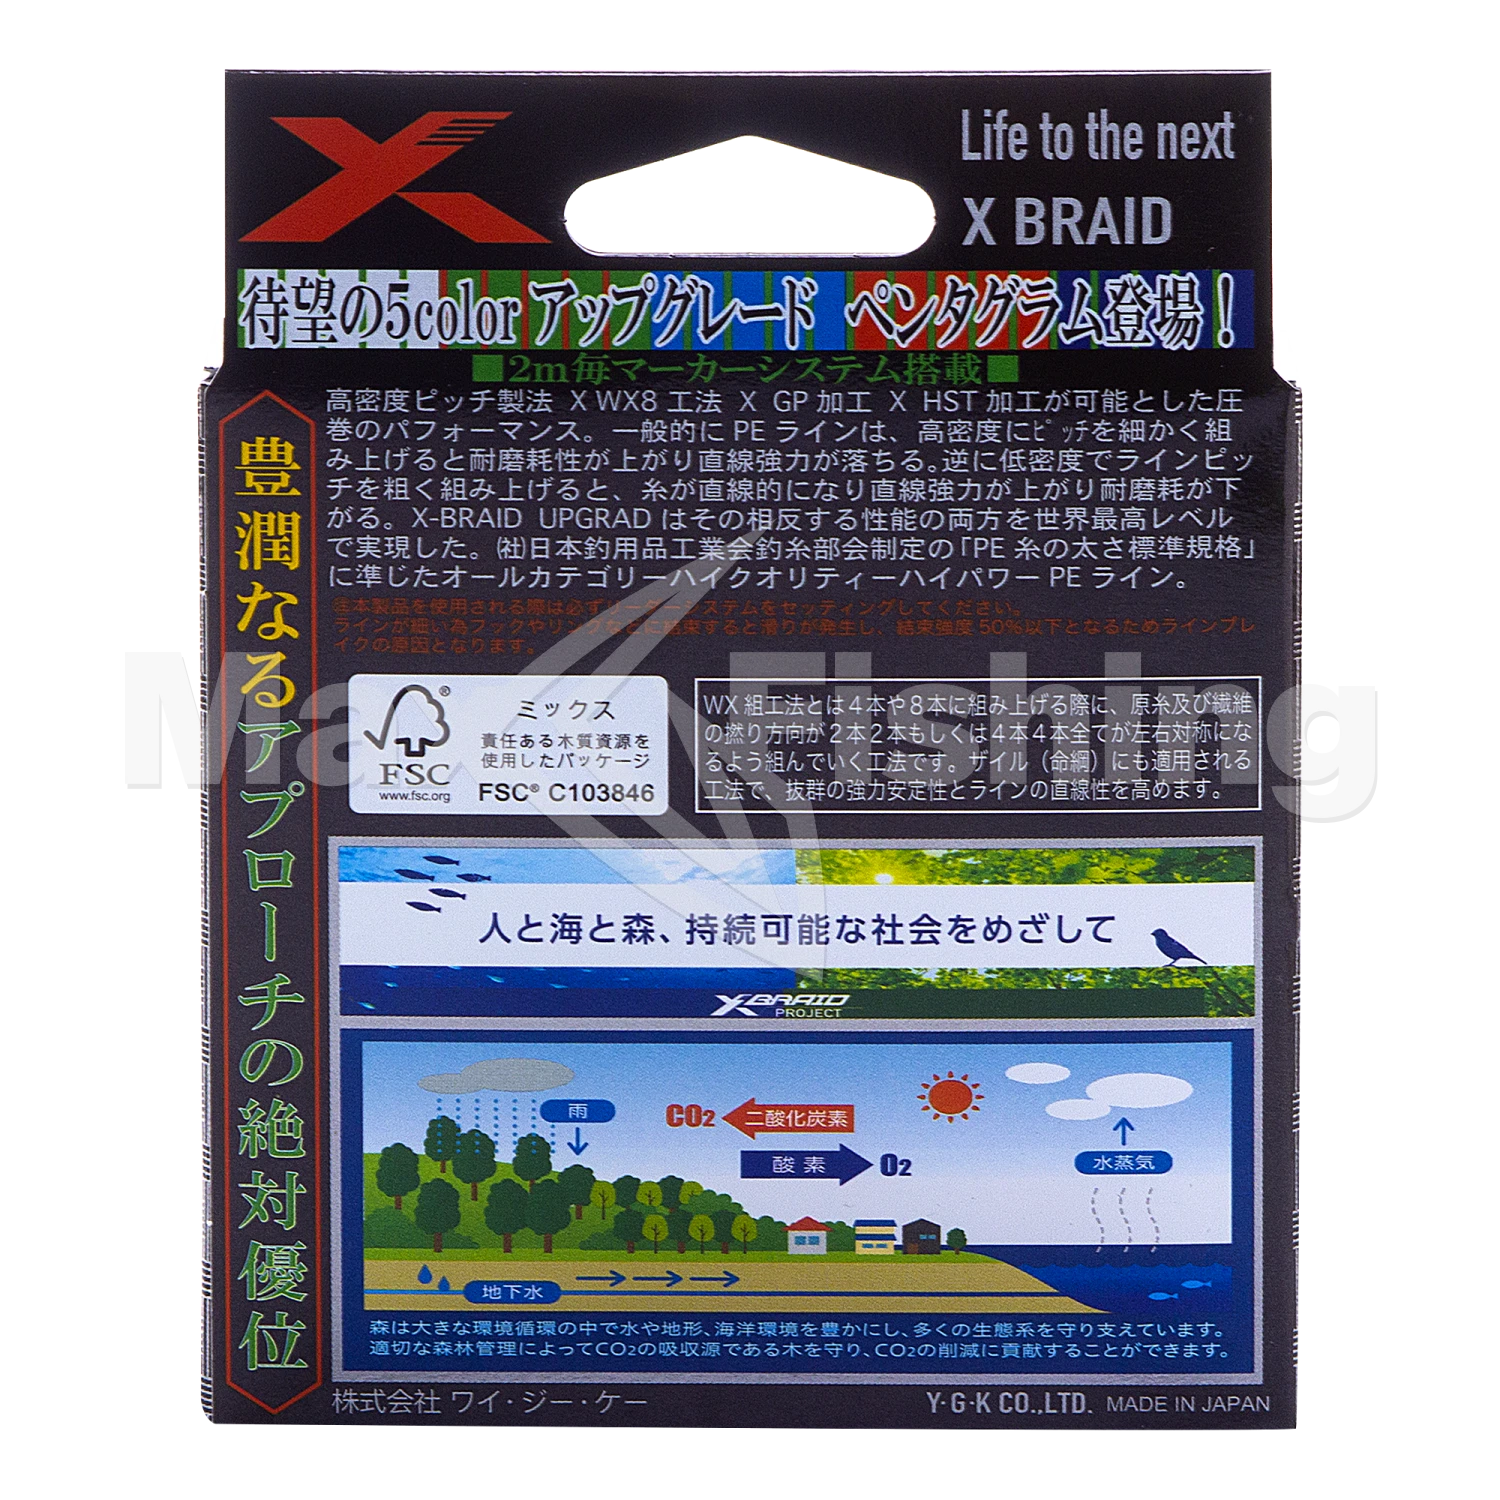 Шнур плетеный YGK X-Braid Upgrade Pentagram PE X8 #0,6 0,128мм 150м (5color)